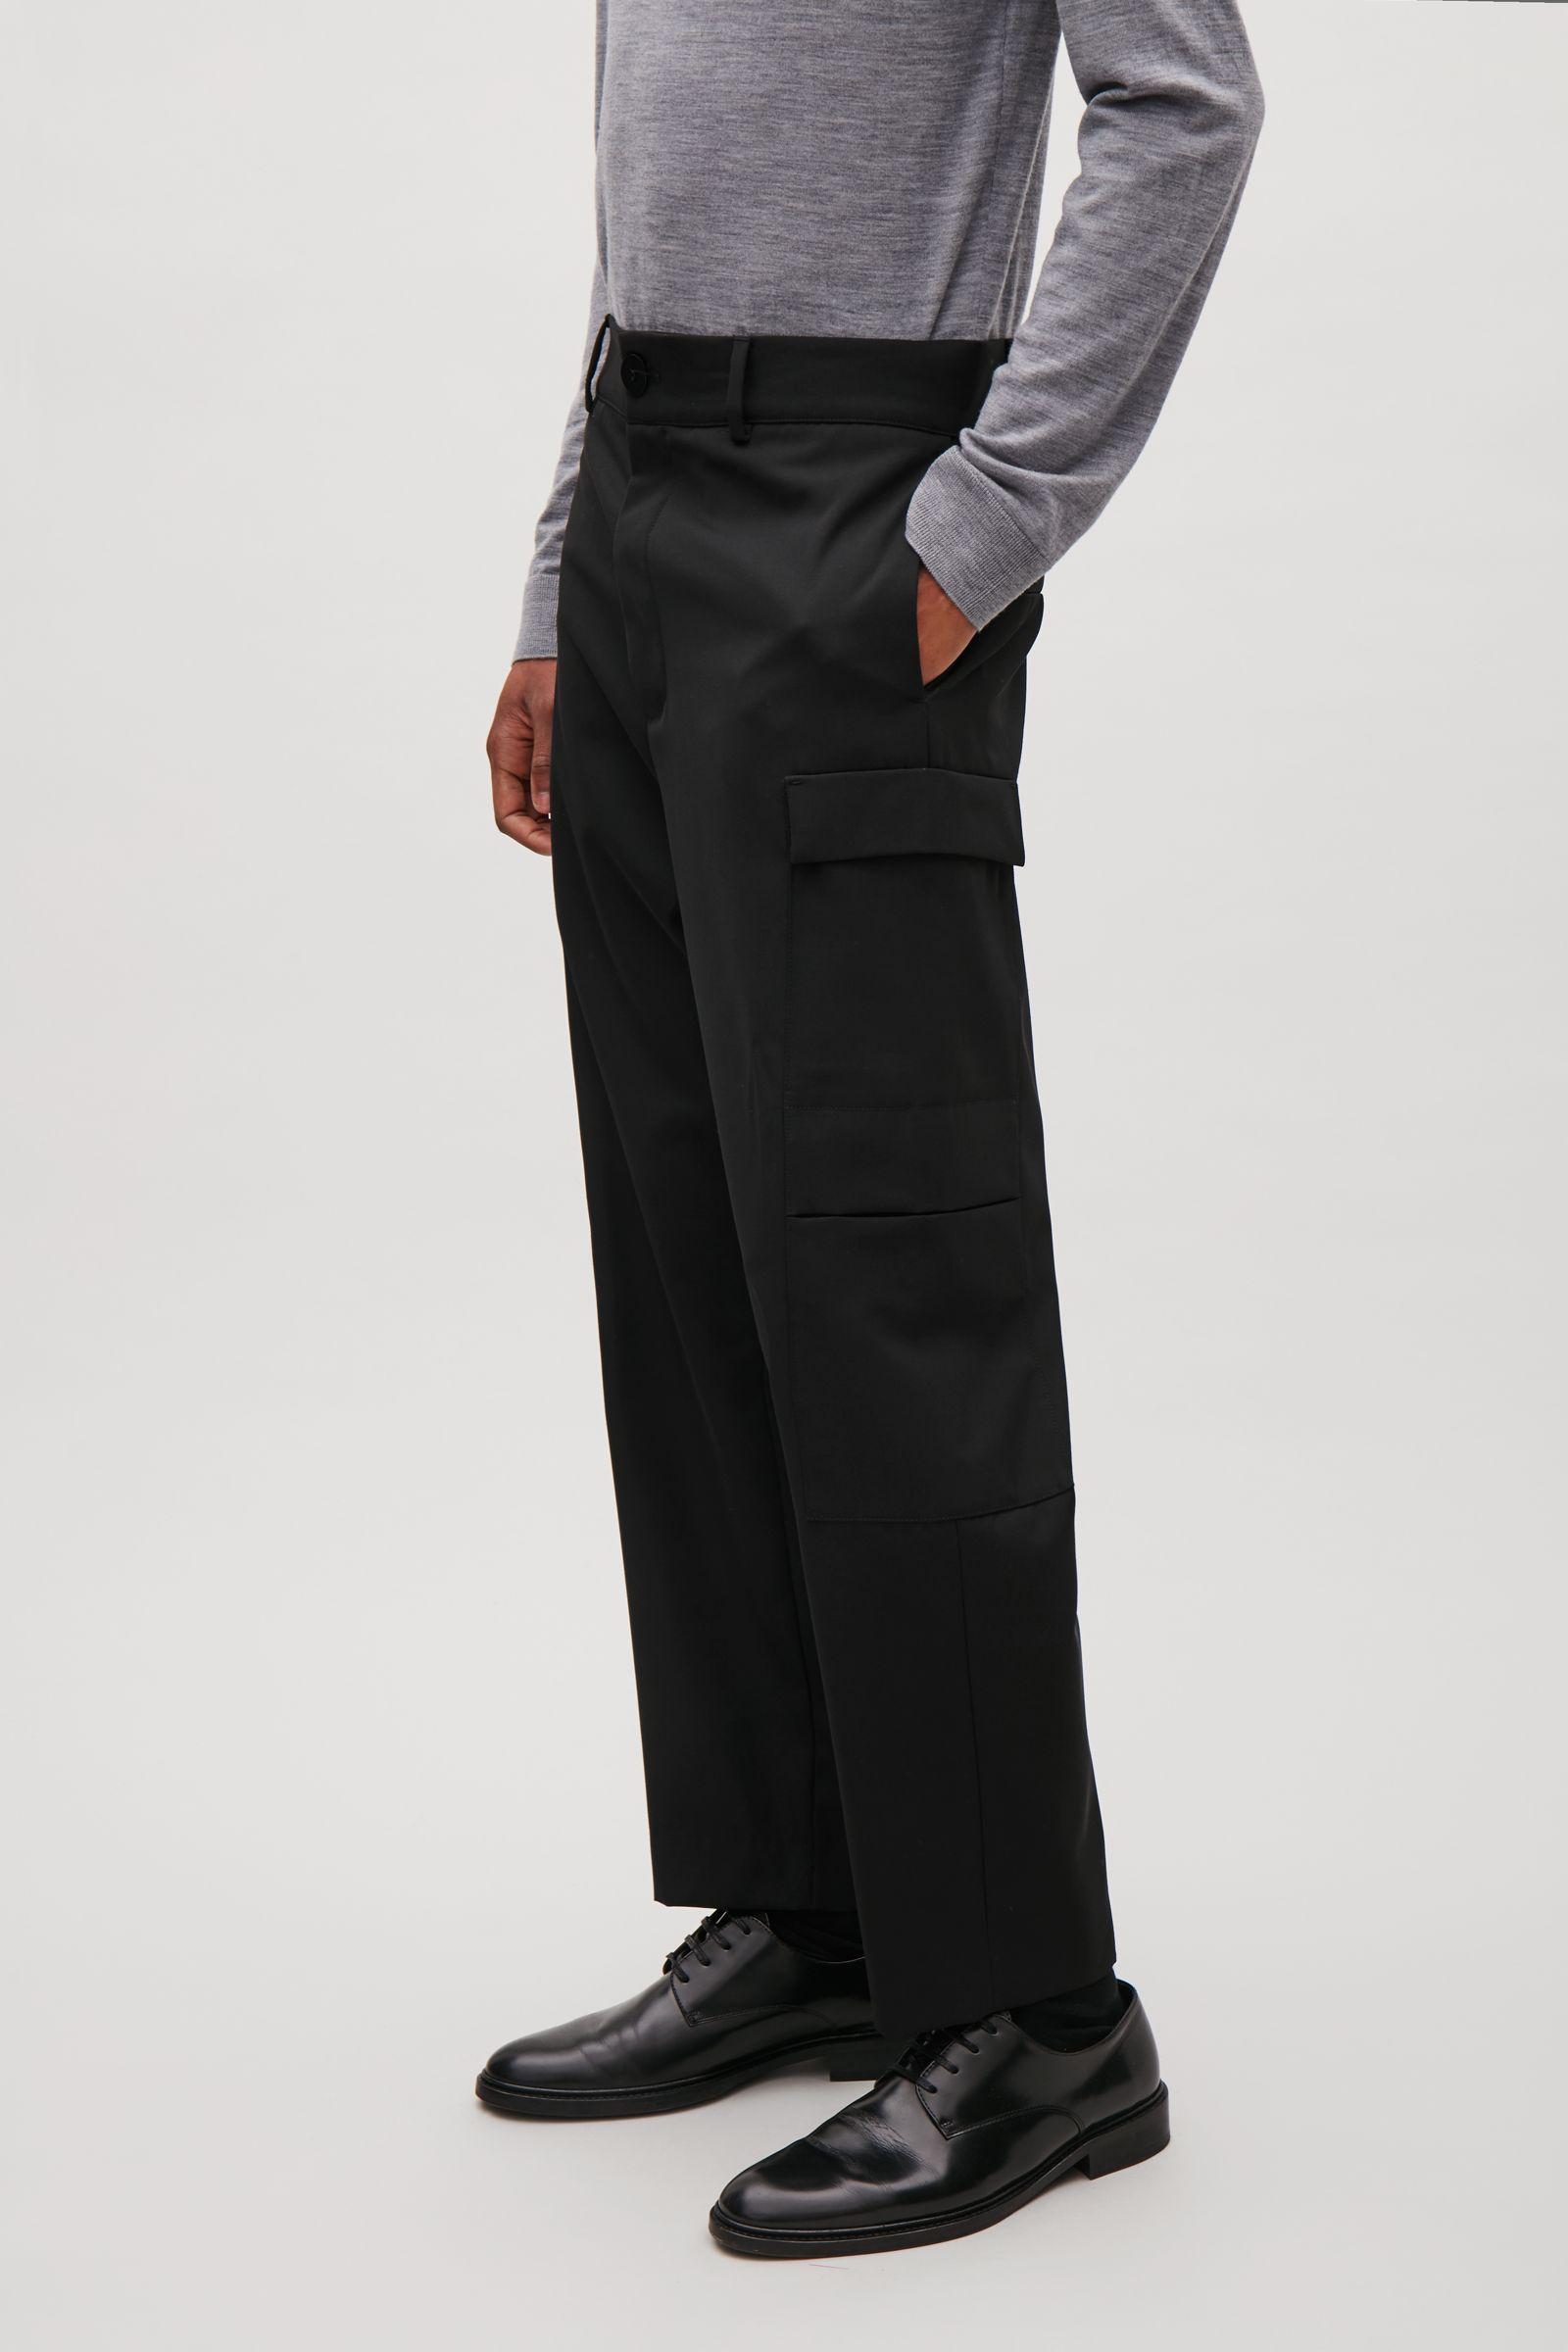 COS Wool Cargo Trousers in Black for Men - Lyst